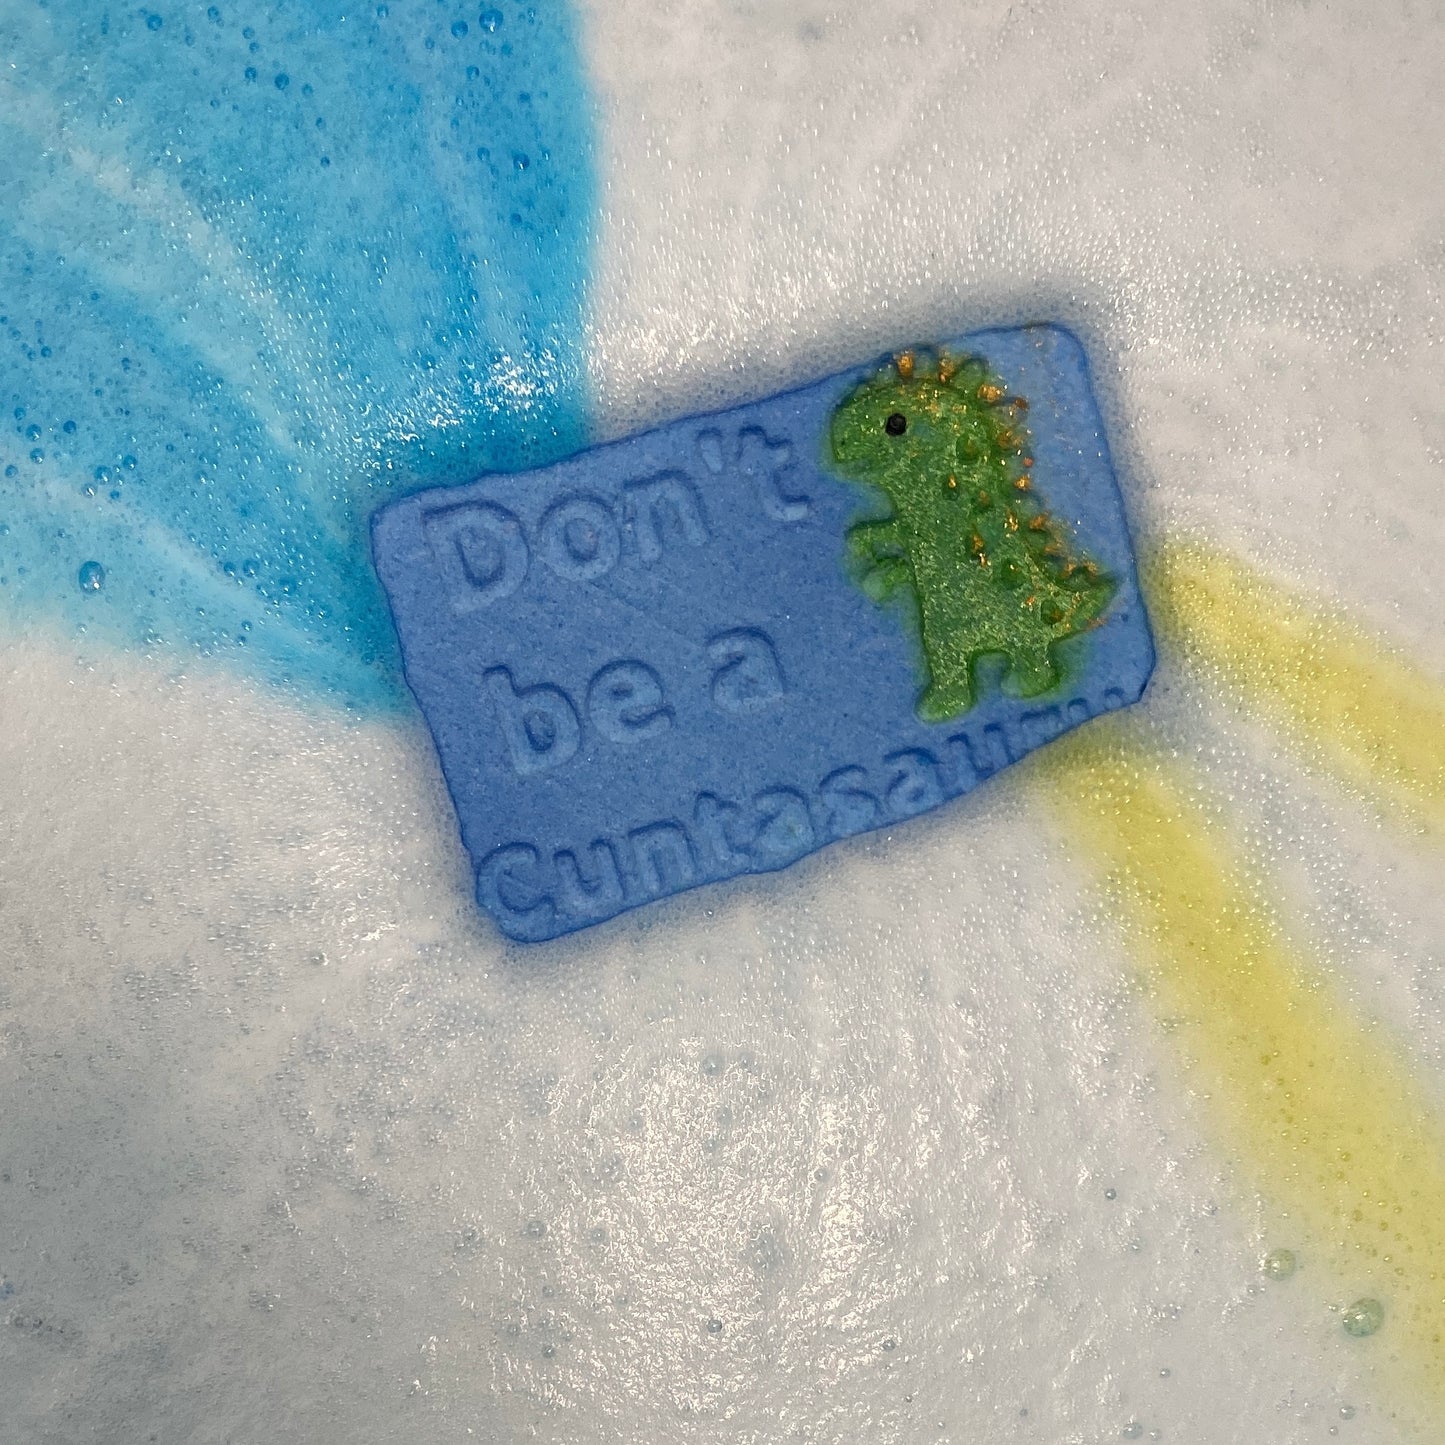 Wholesale Bath Bomb - Don't be a C*ntasaurus 190g